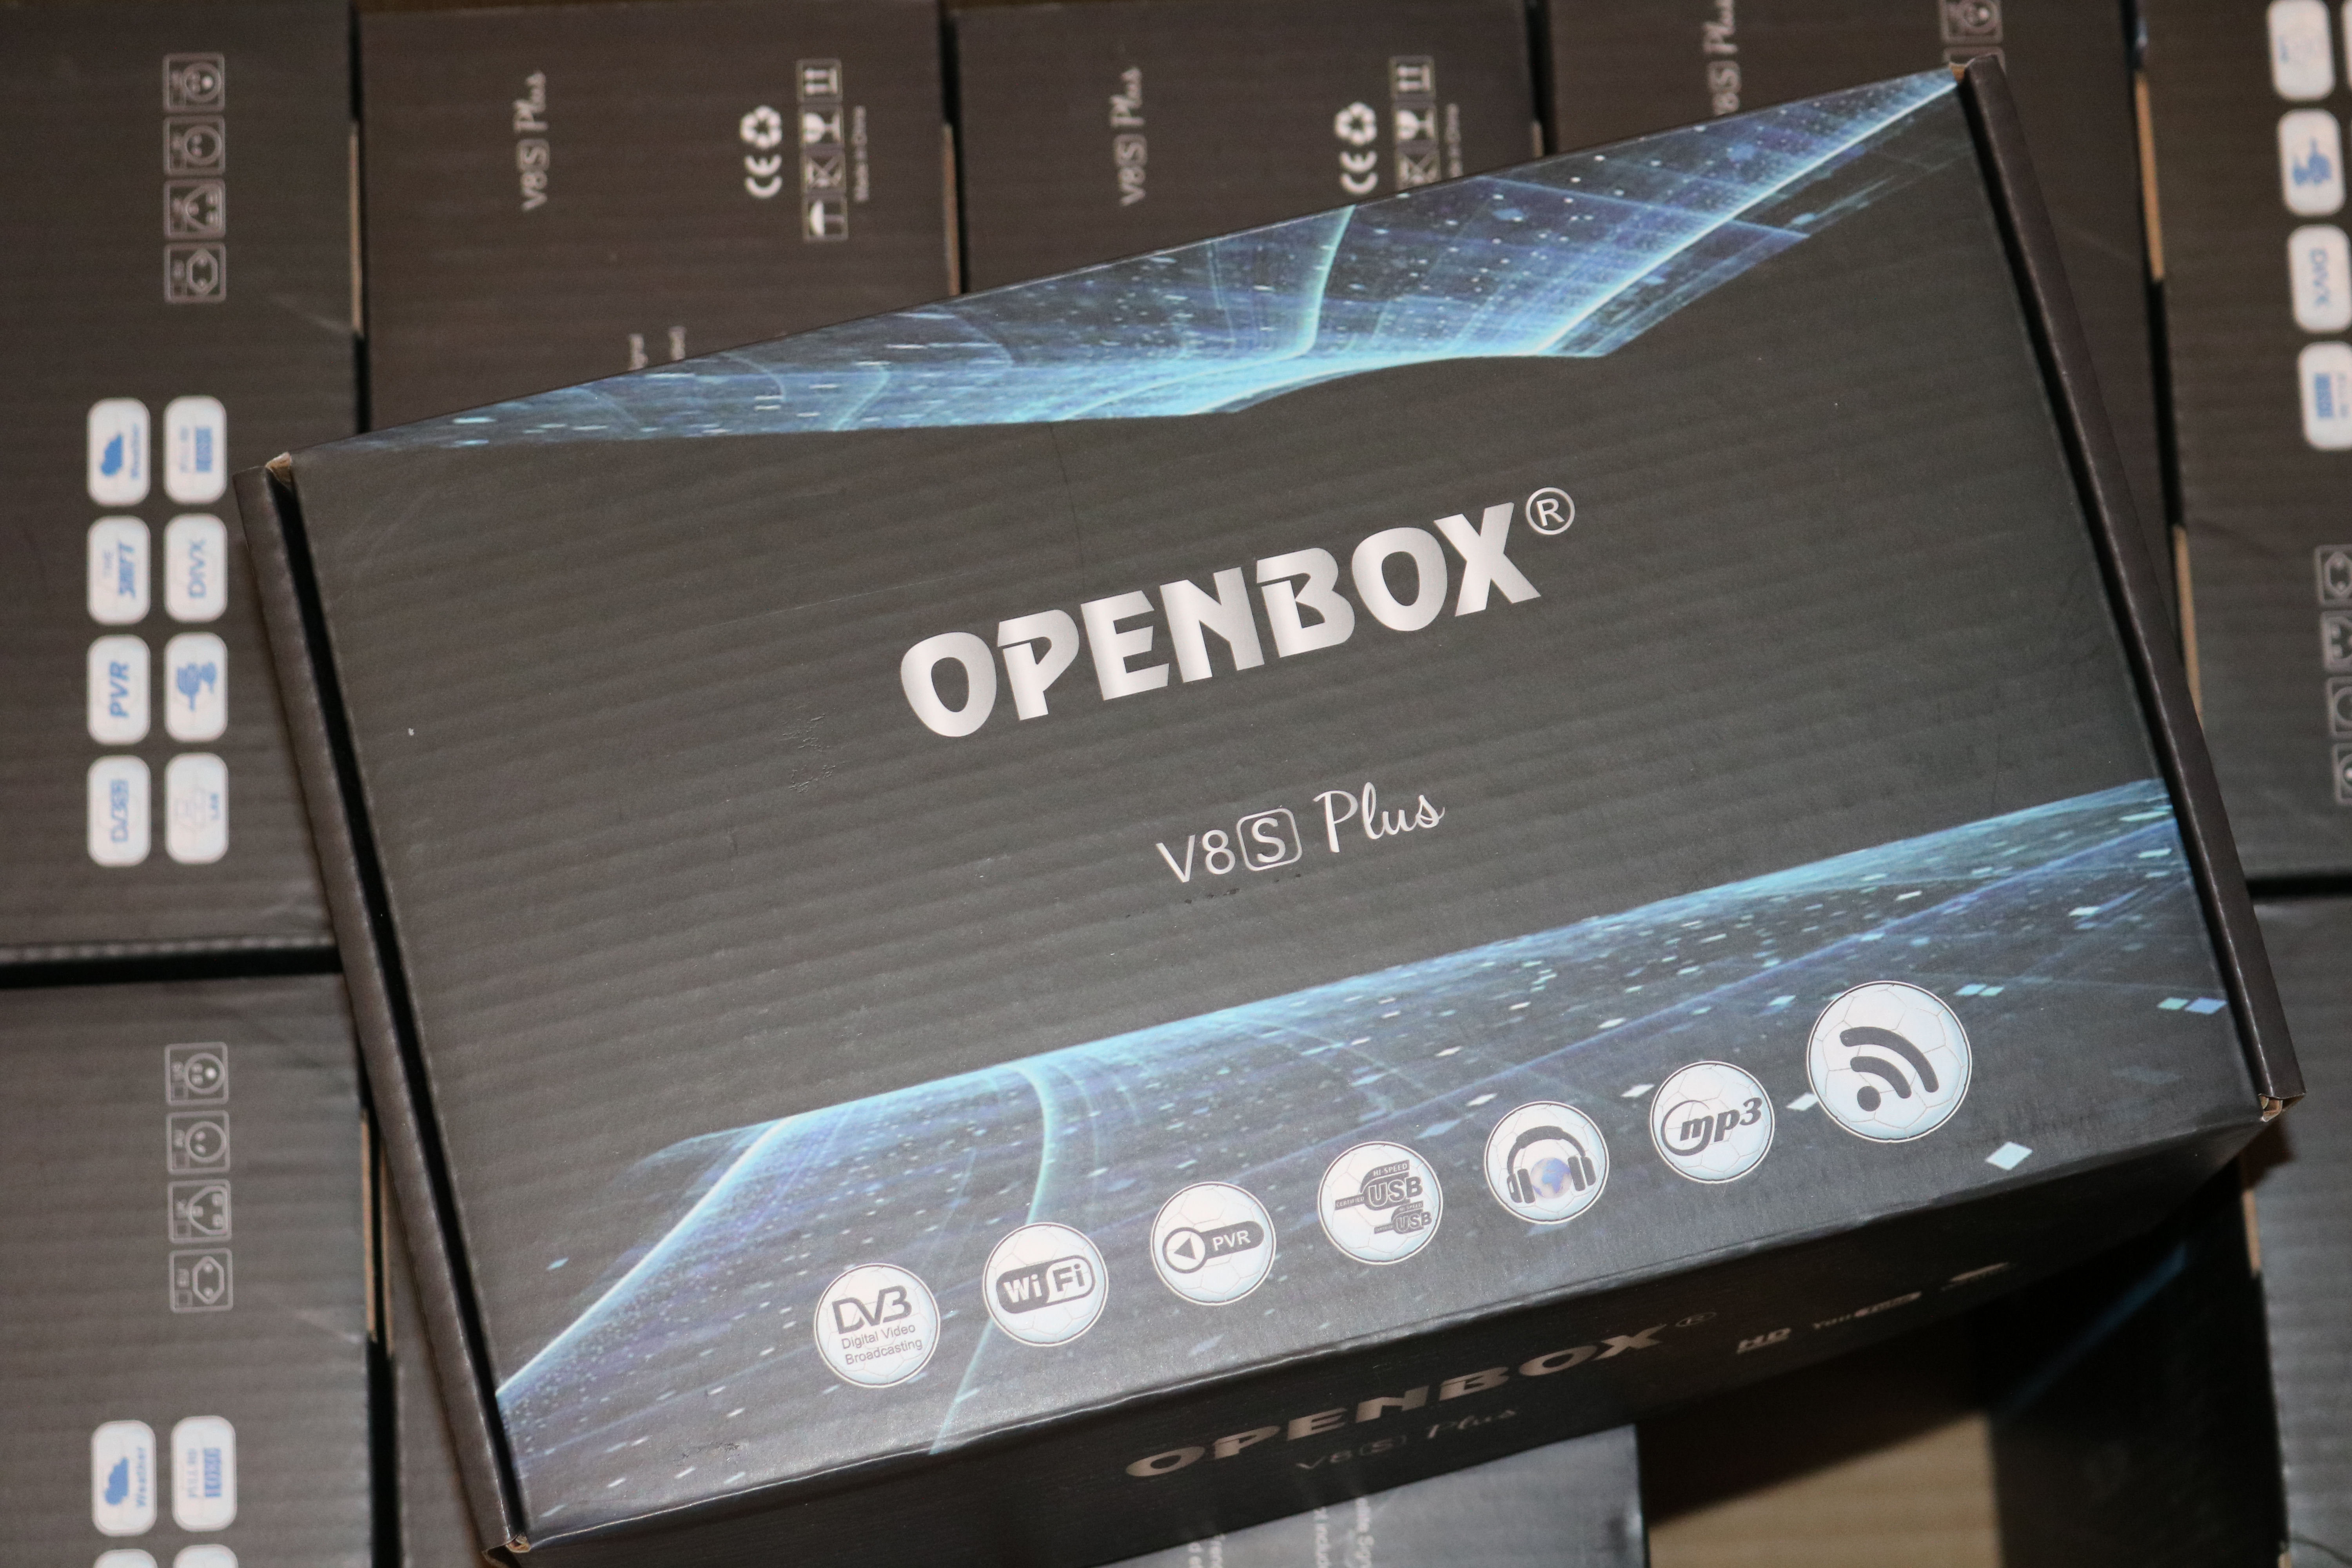 openbox v8s subscription